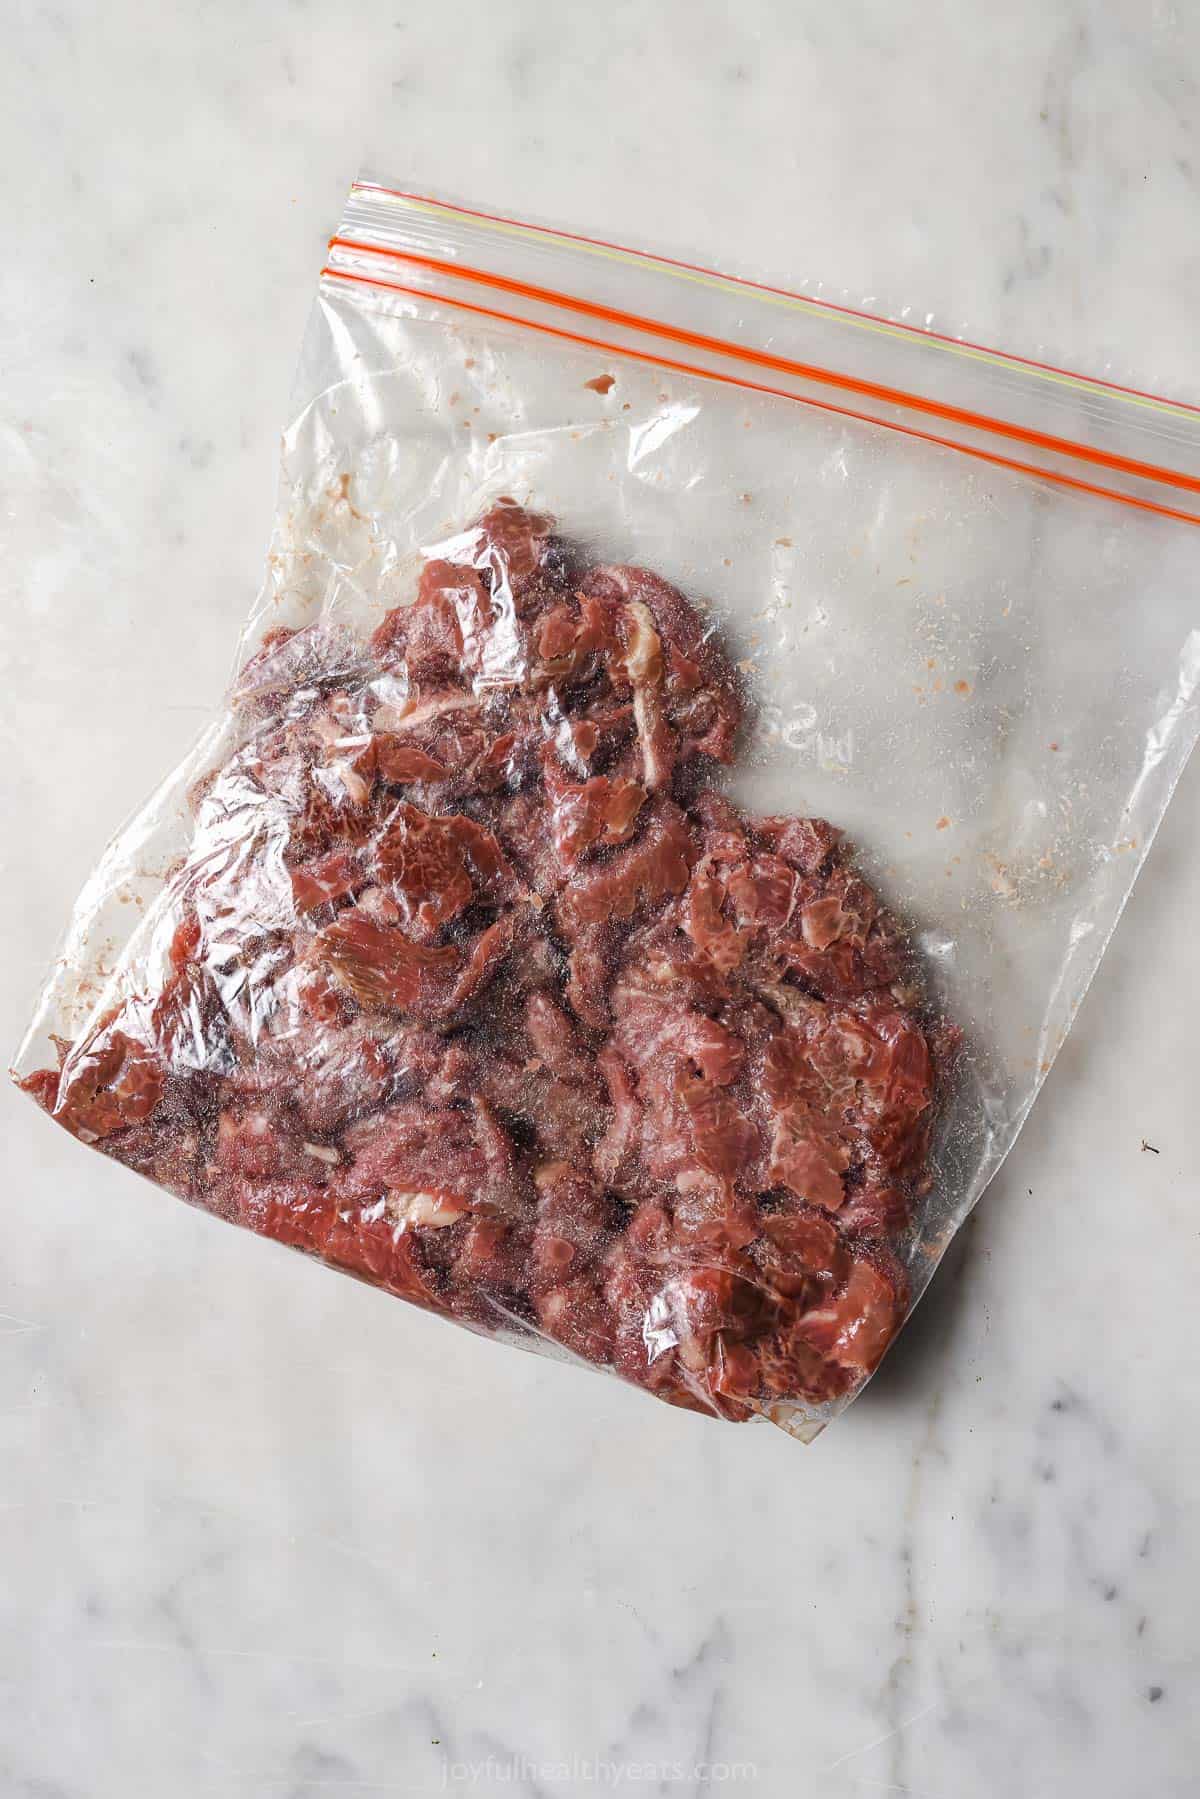 Steak and arrowroot in a large Ziploc bag.